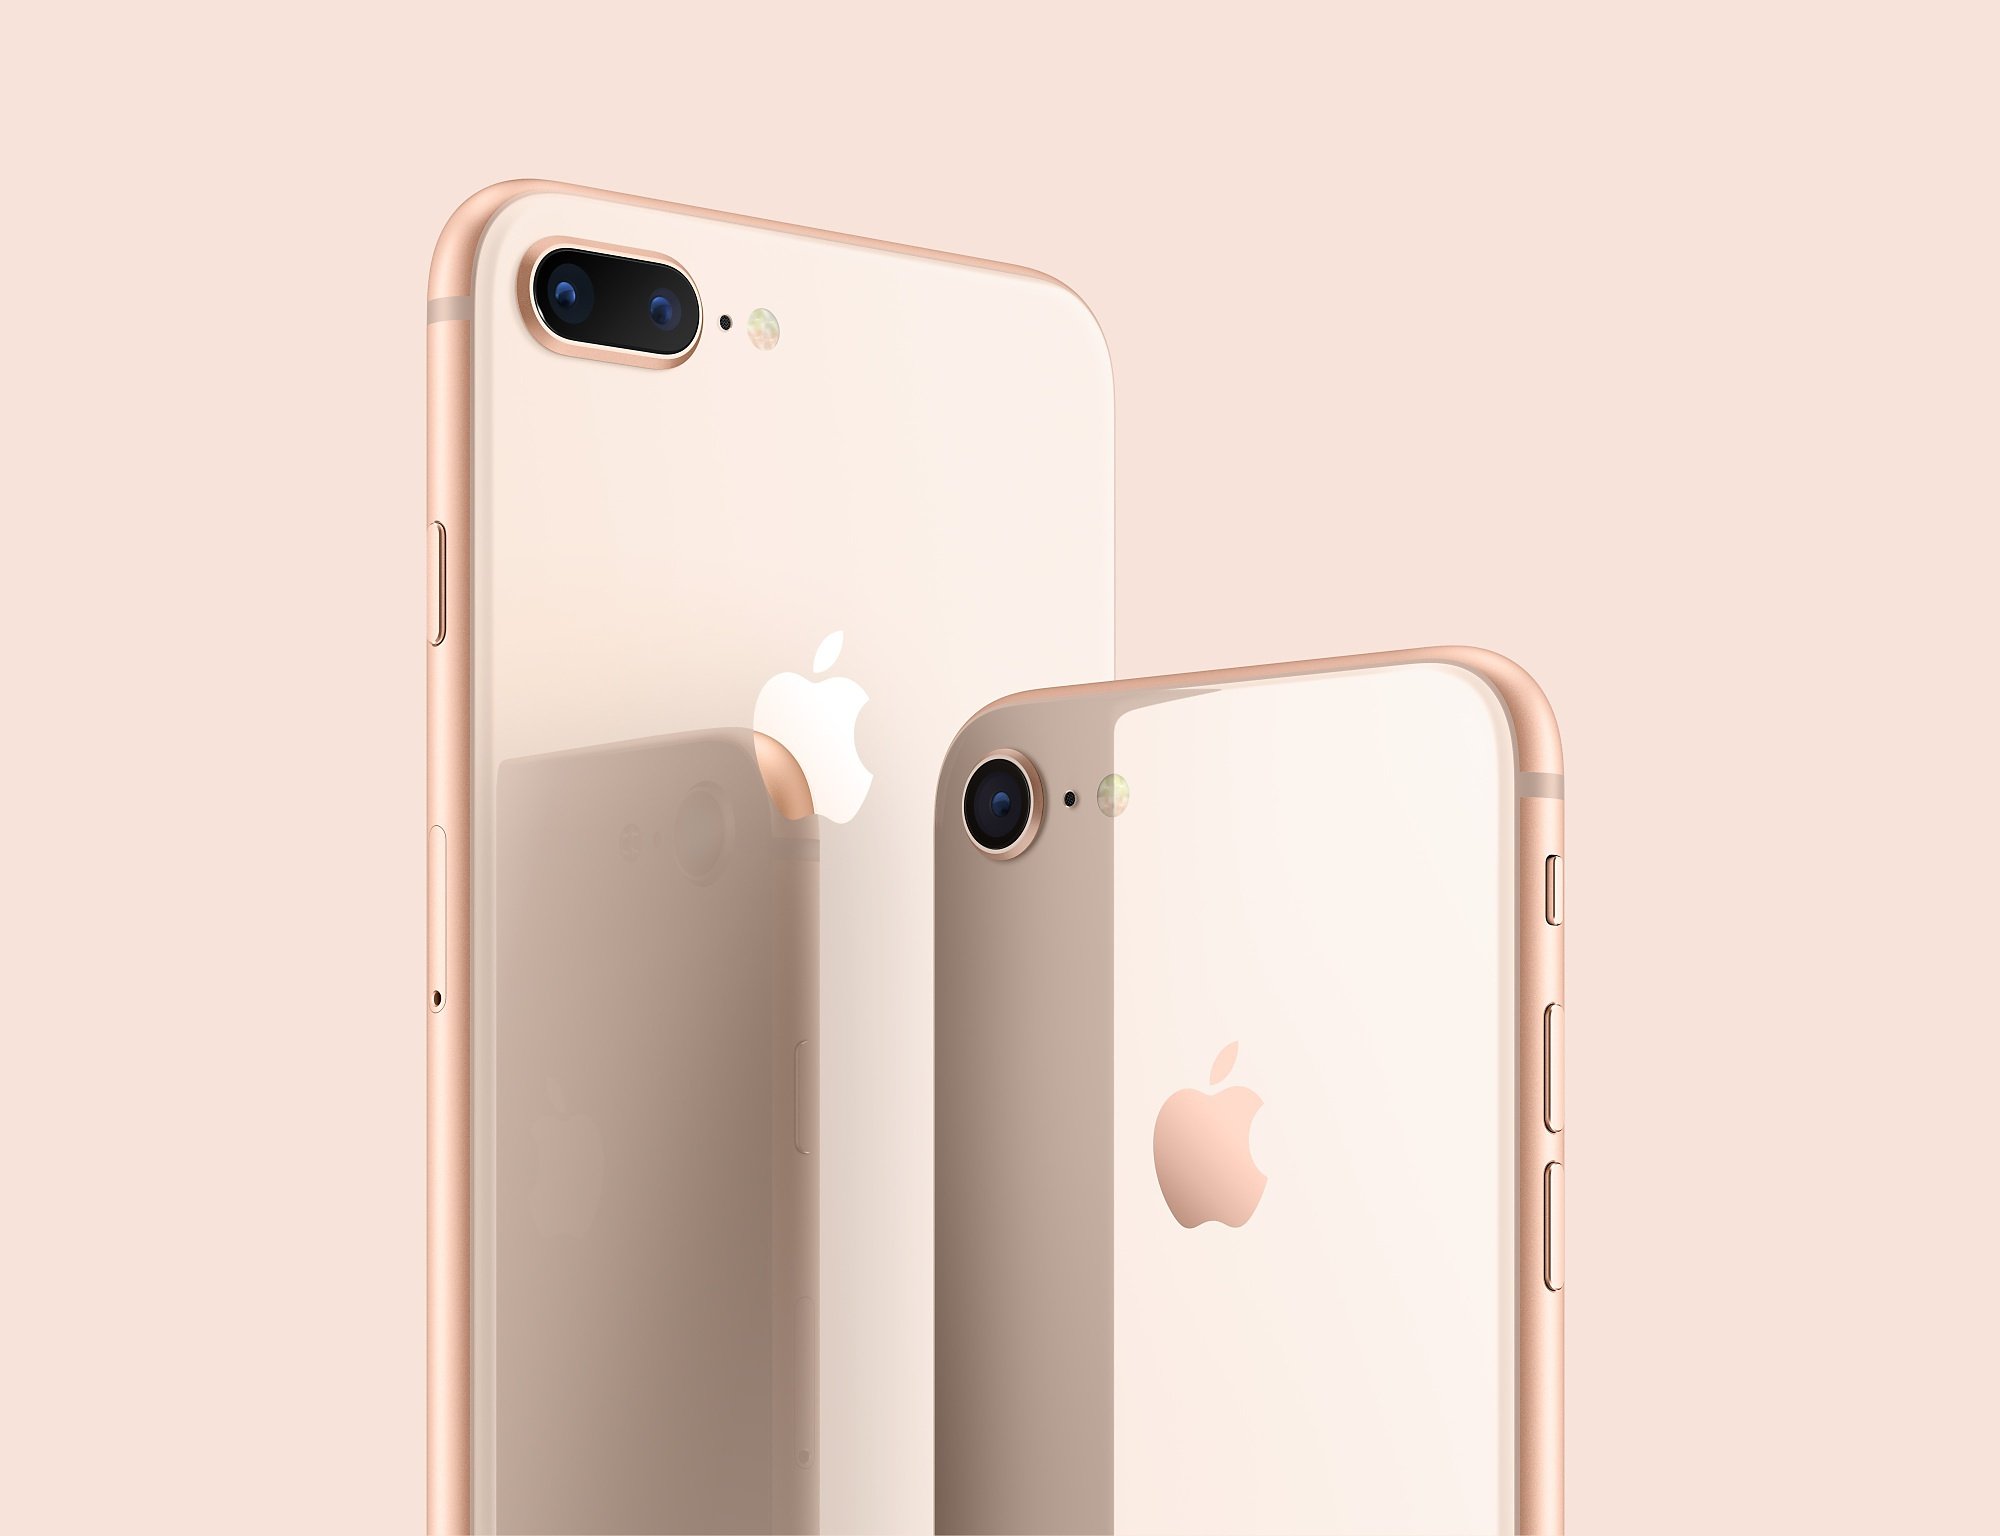 Apple iPhone 8 Plus specs, review, release date - PhonesData